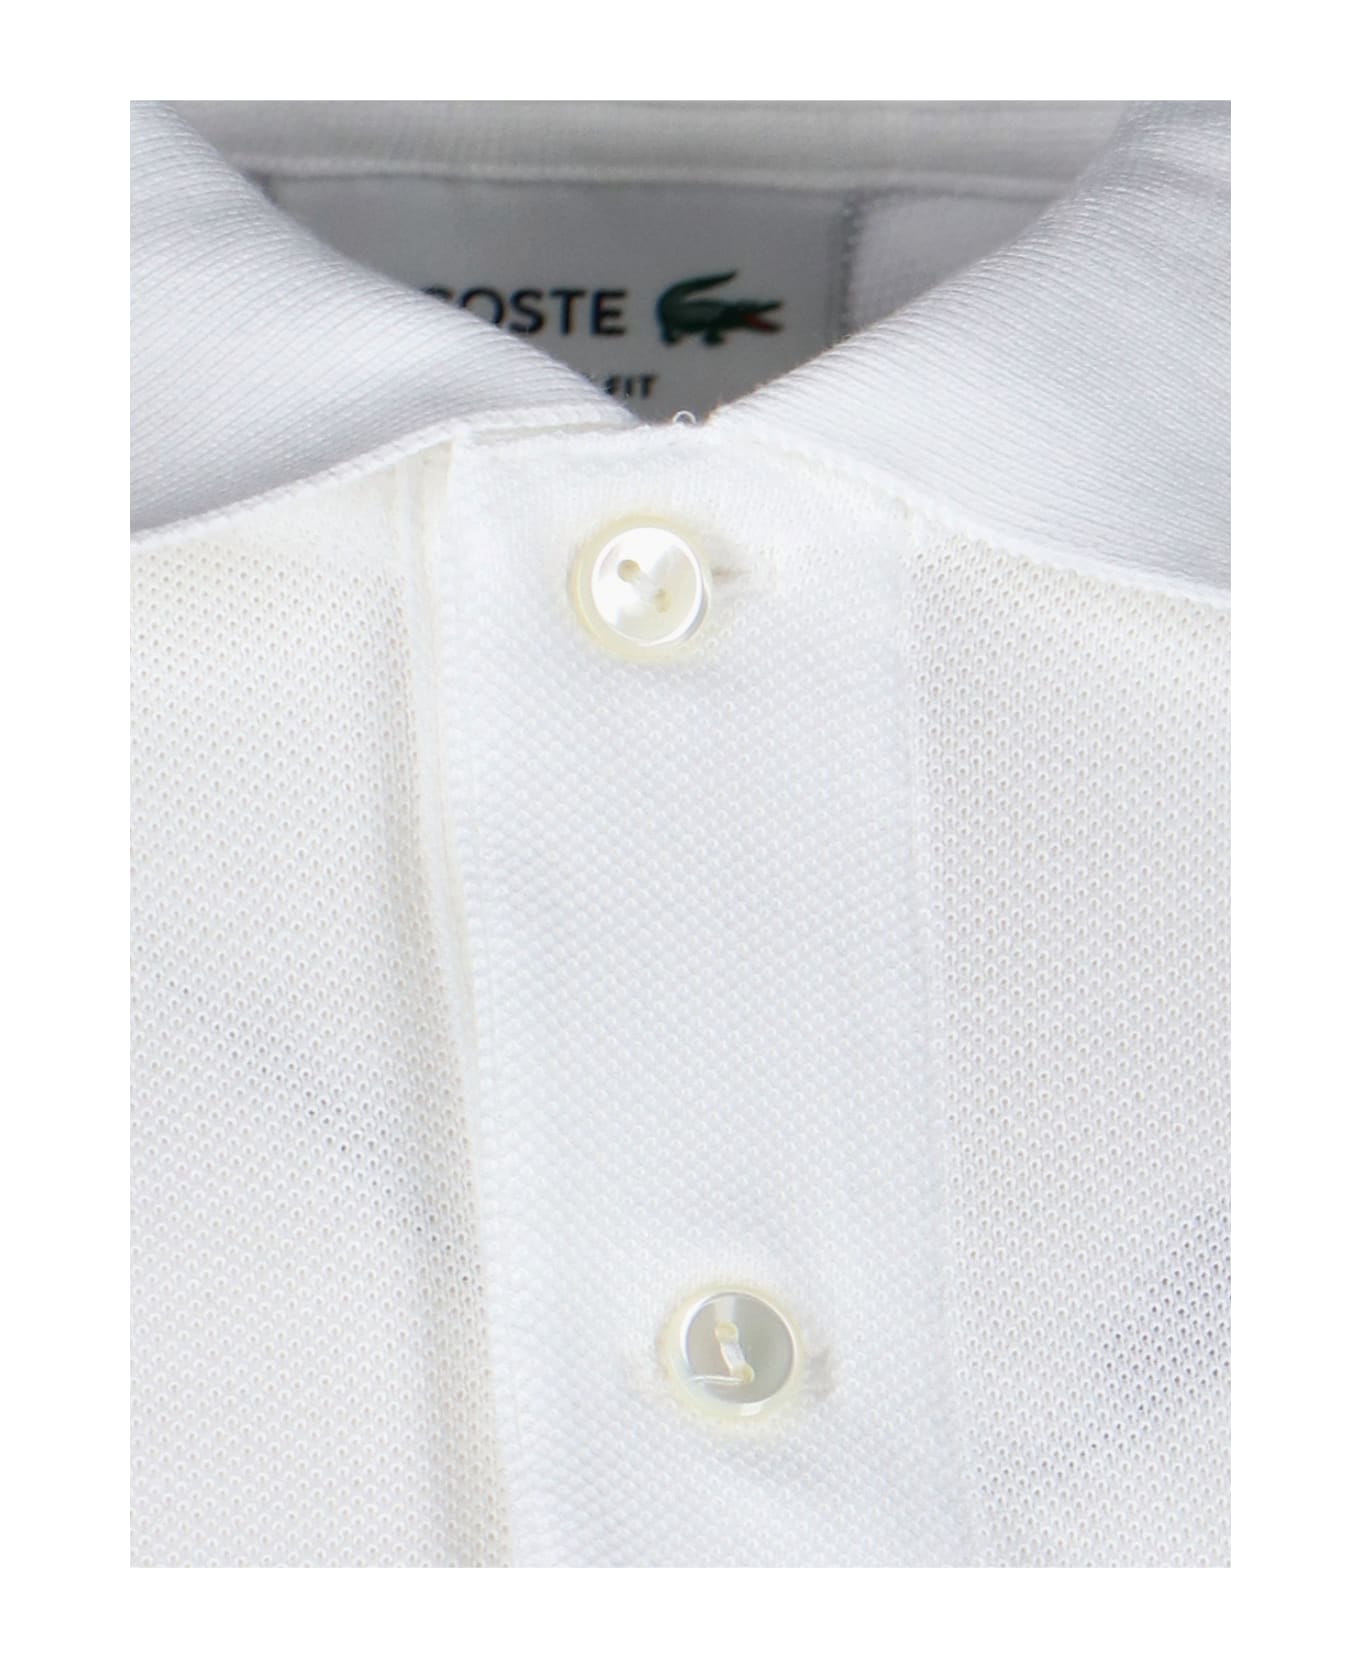 Lacoste Classic Design Polo Shirt - White